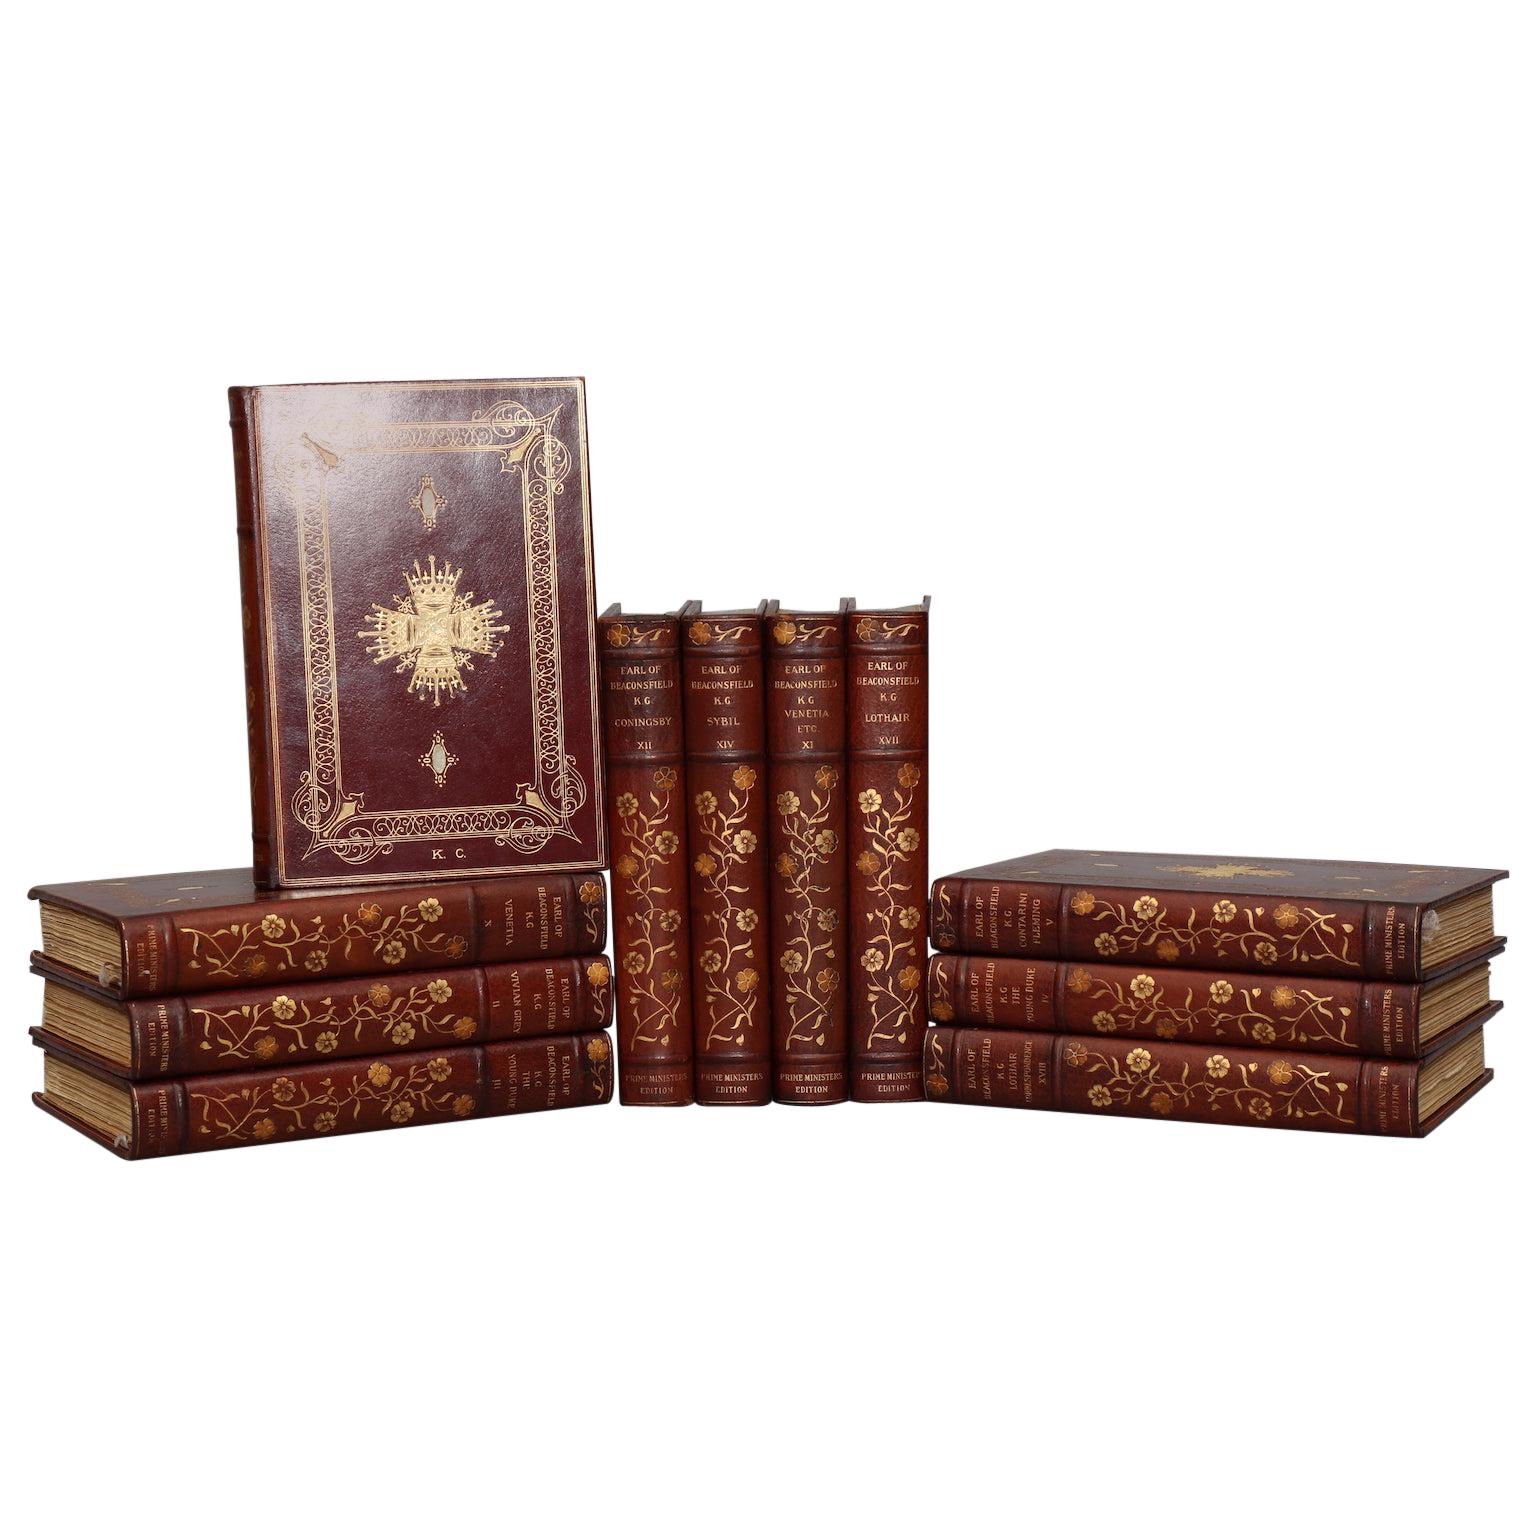 Books, The Works of Benjamin Disarelli Prime Minister's Edition!